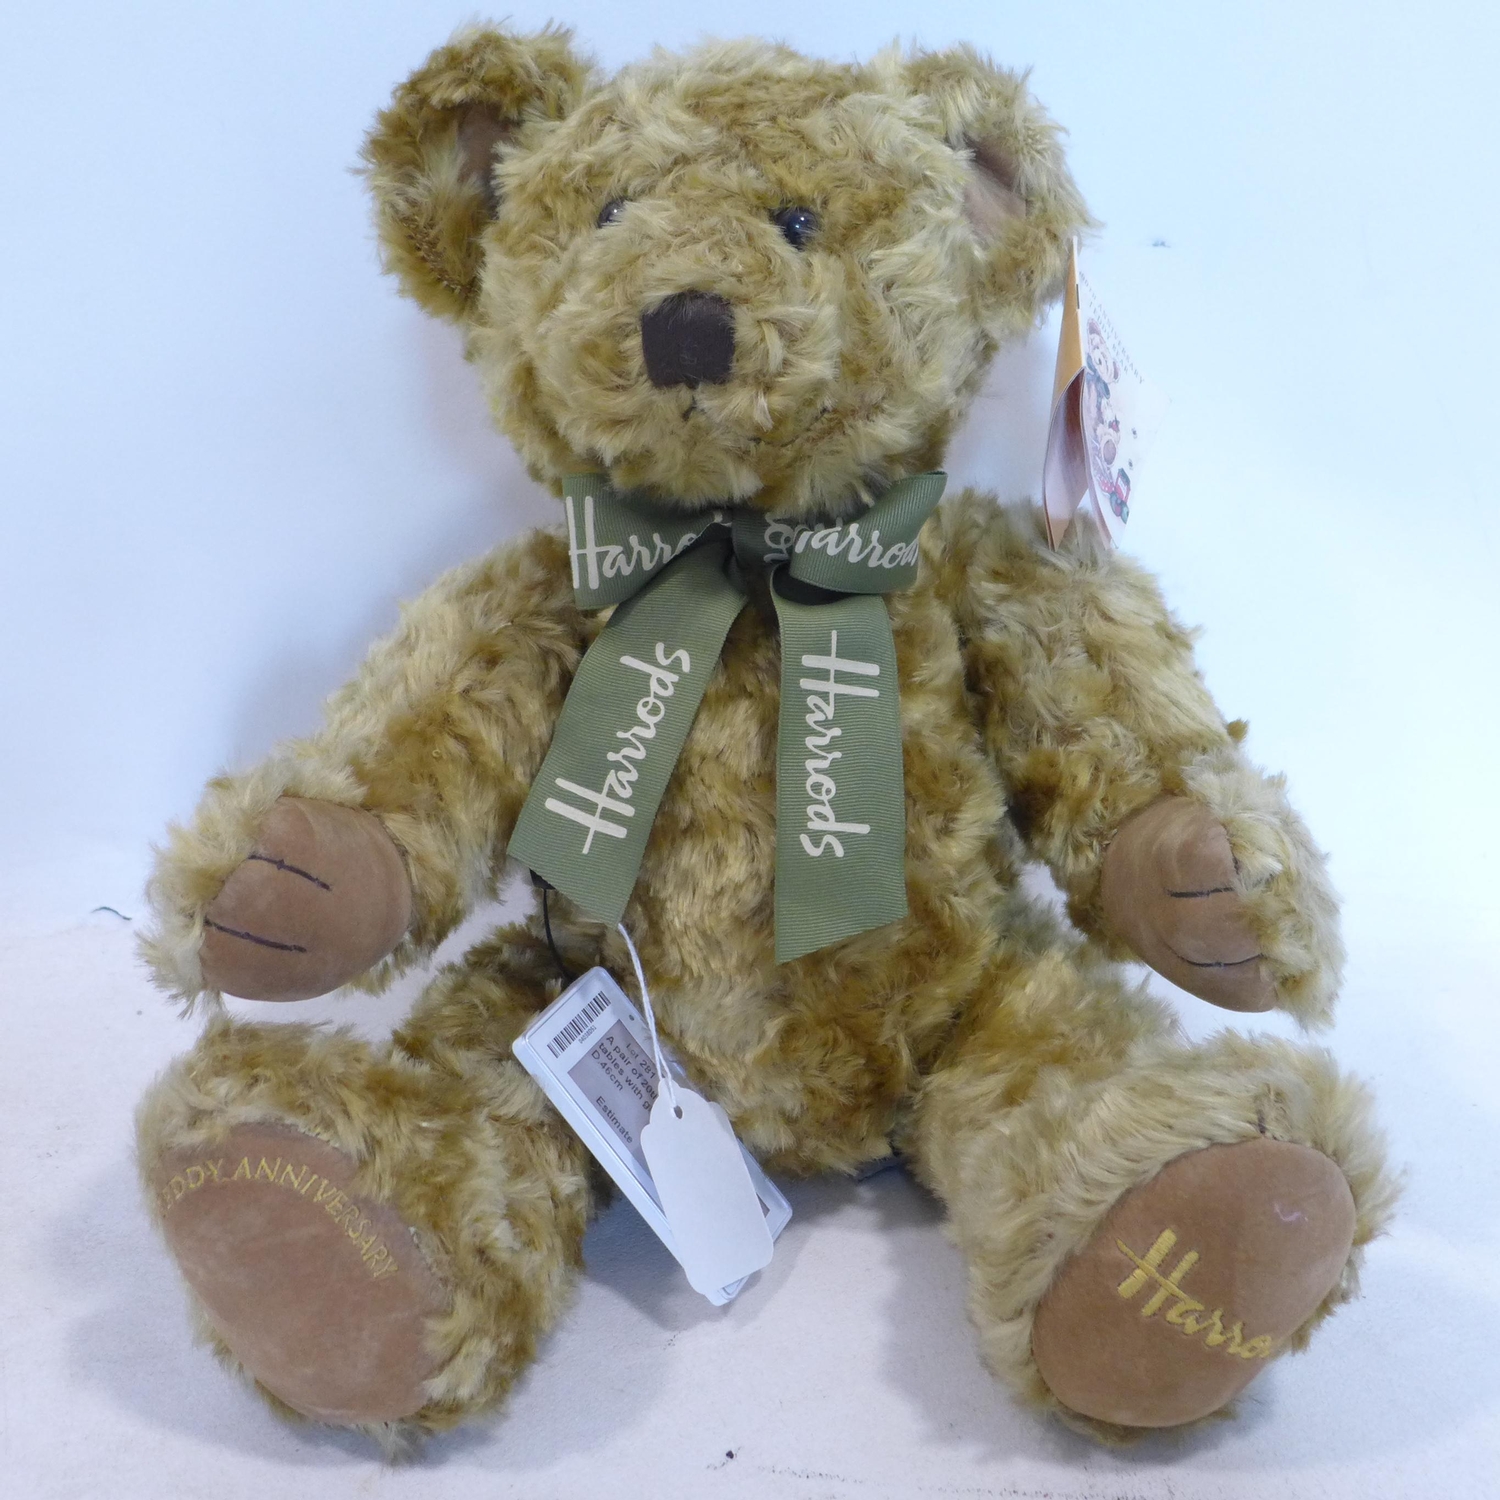 harrods 100th anniversary teddy bear